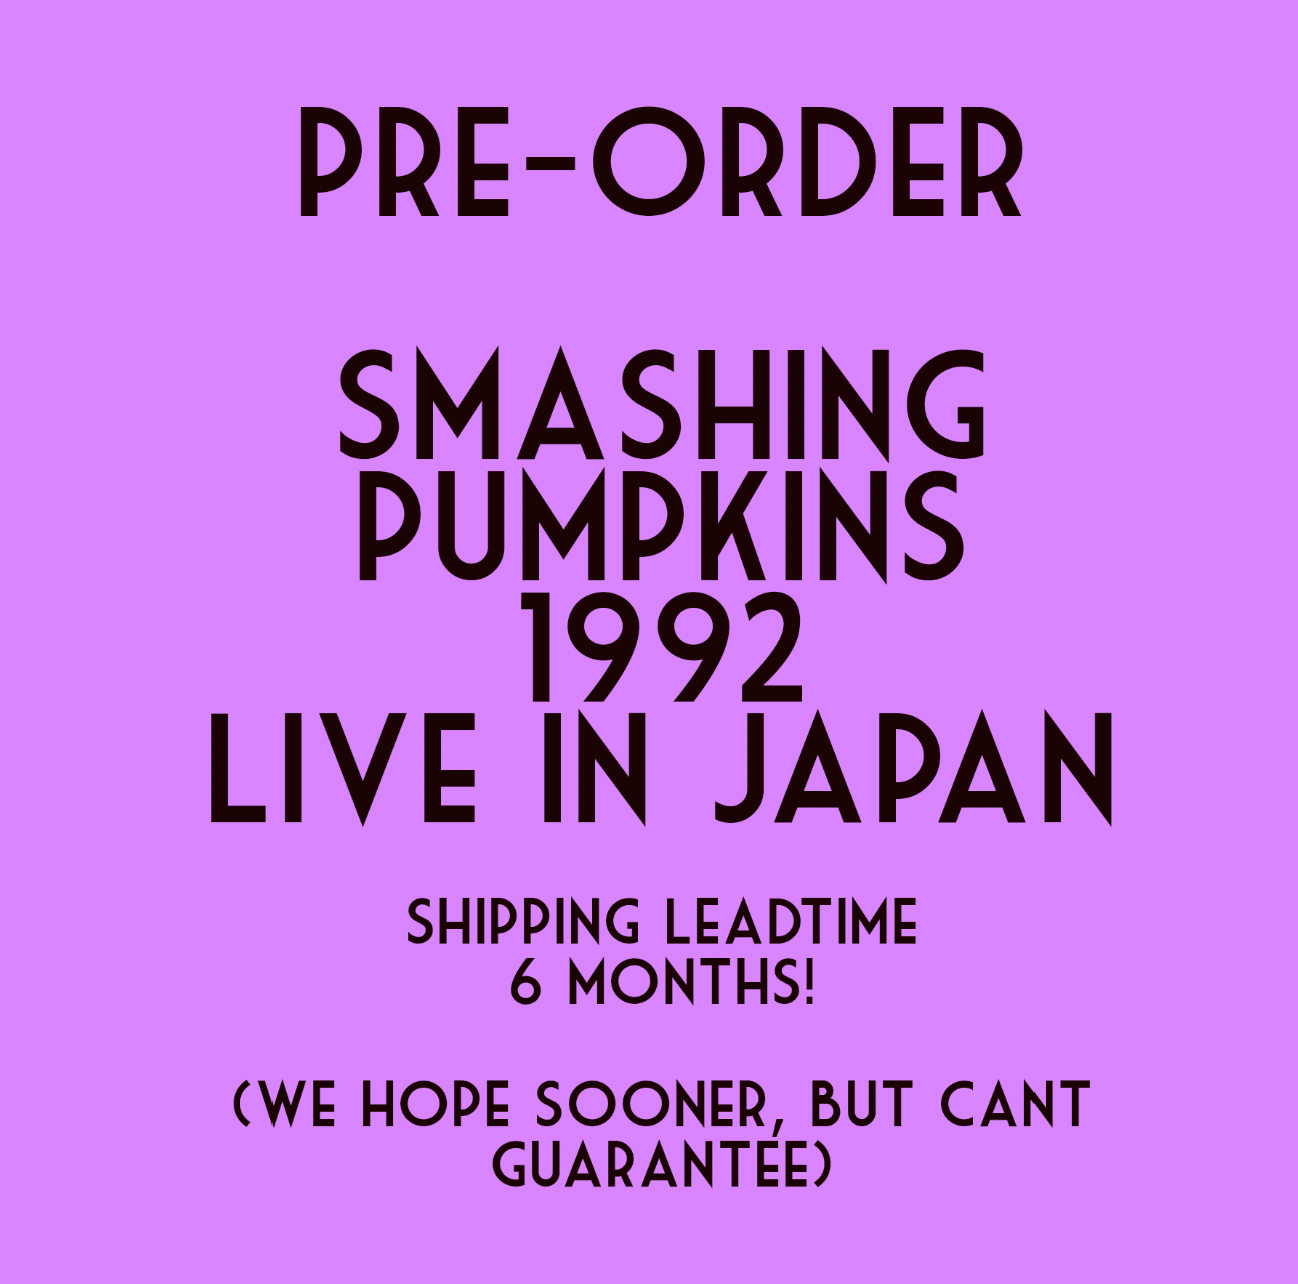 PRE-ORDER LIVE IN JAPAN LP 1992